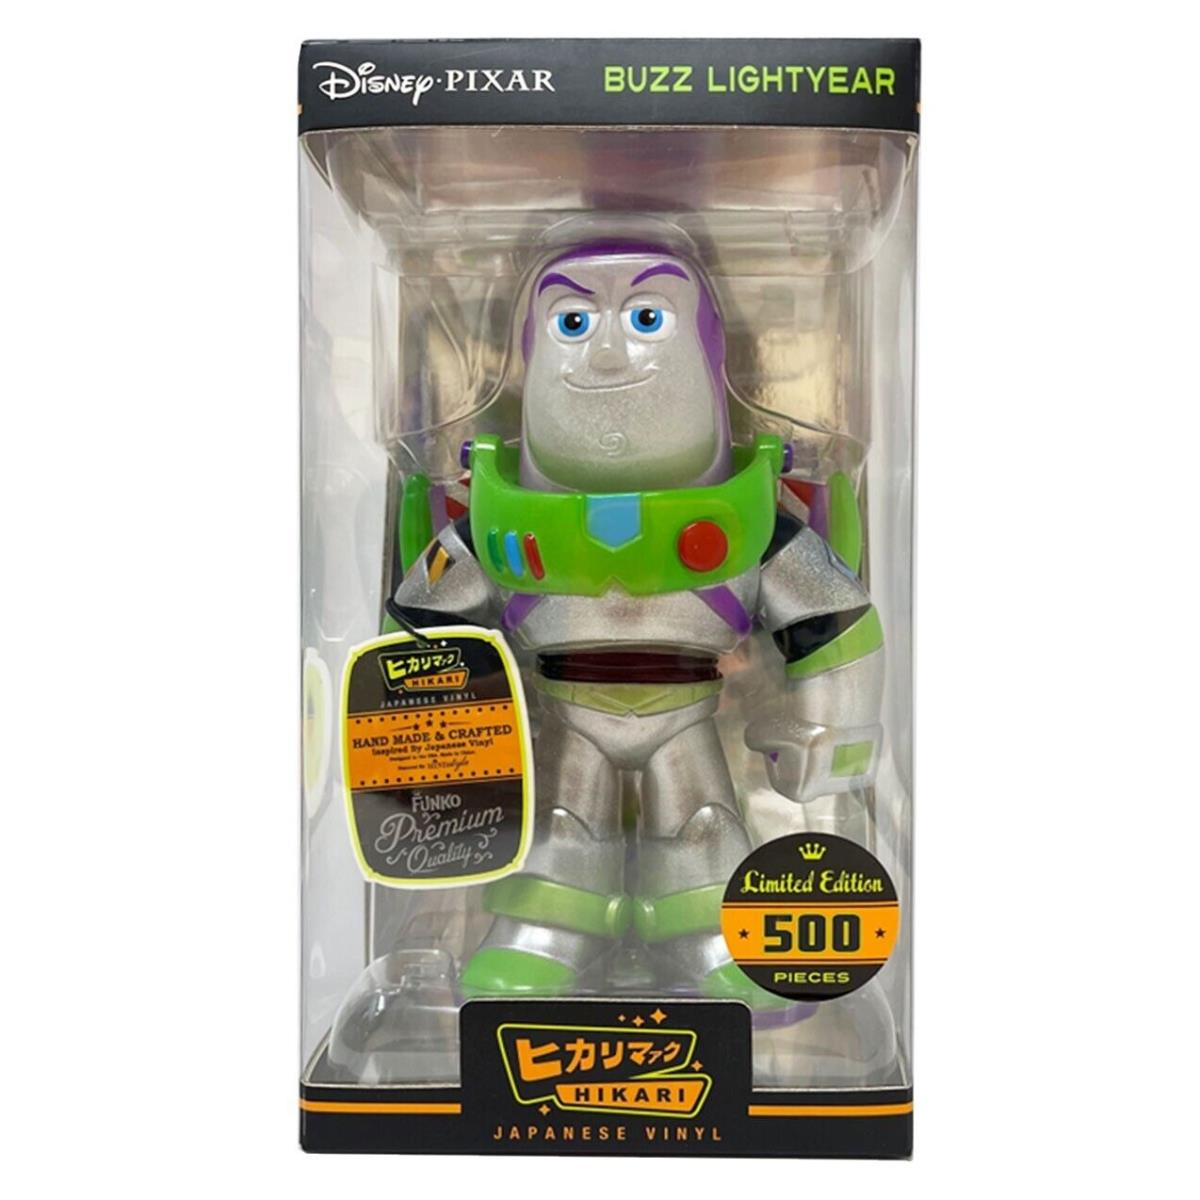 Hikari Japanese Vinyl Disney Pixar - Buzz Lightyear Limited Edition 500 Vaulted